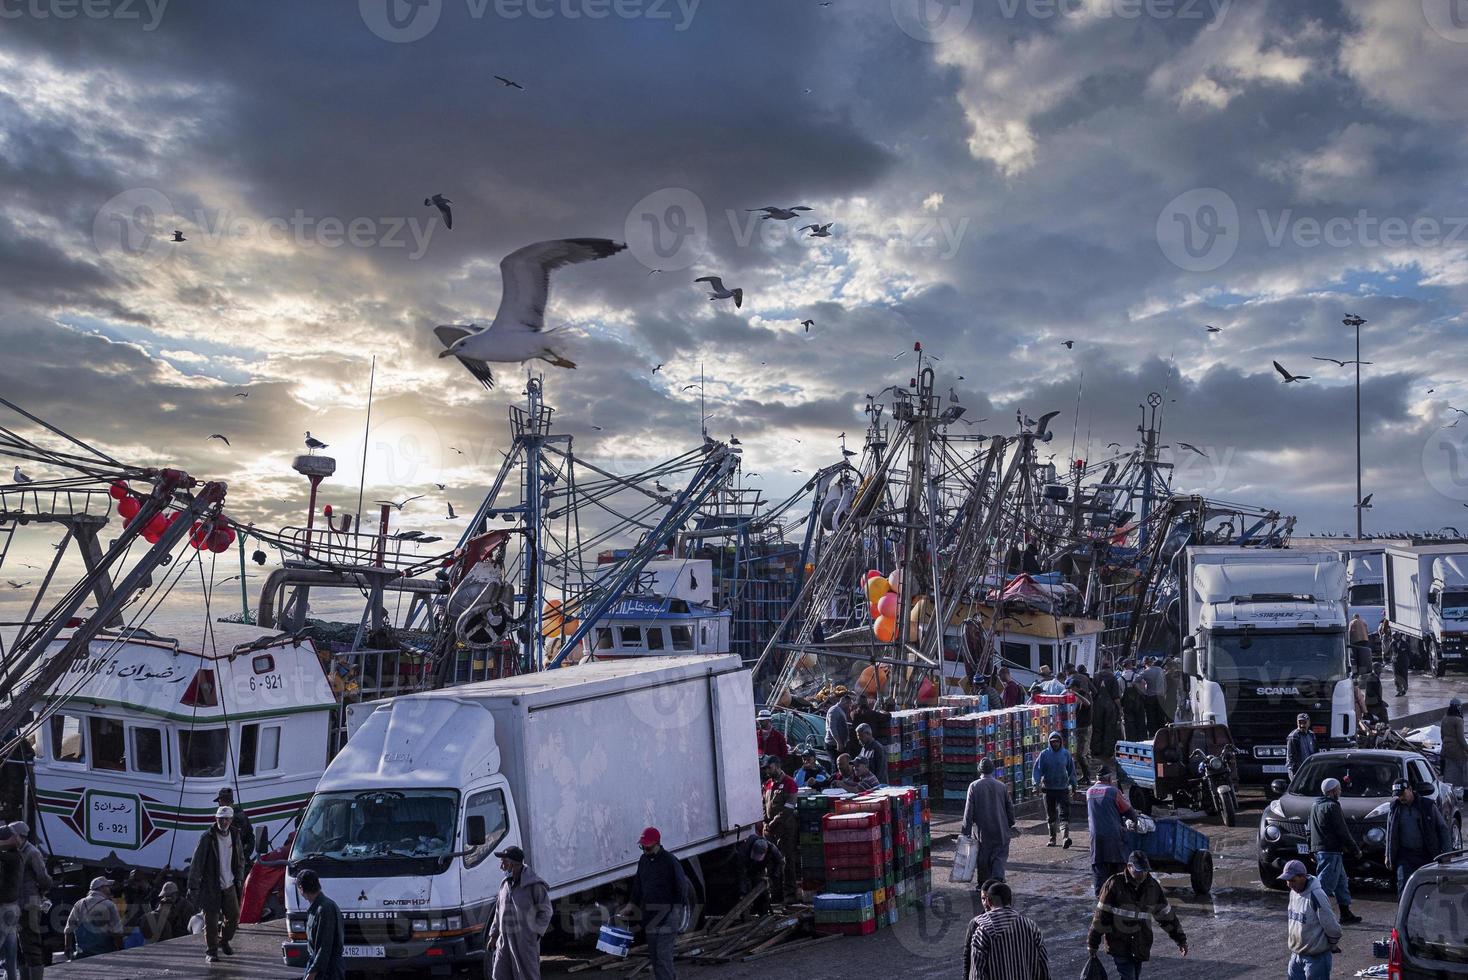 People walk around market beside trucks and fishing boats at marina photo